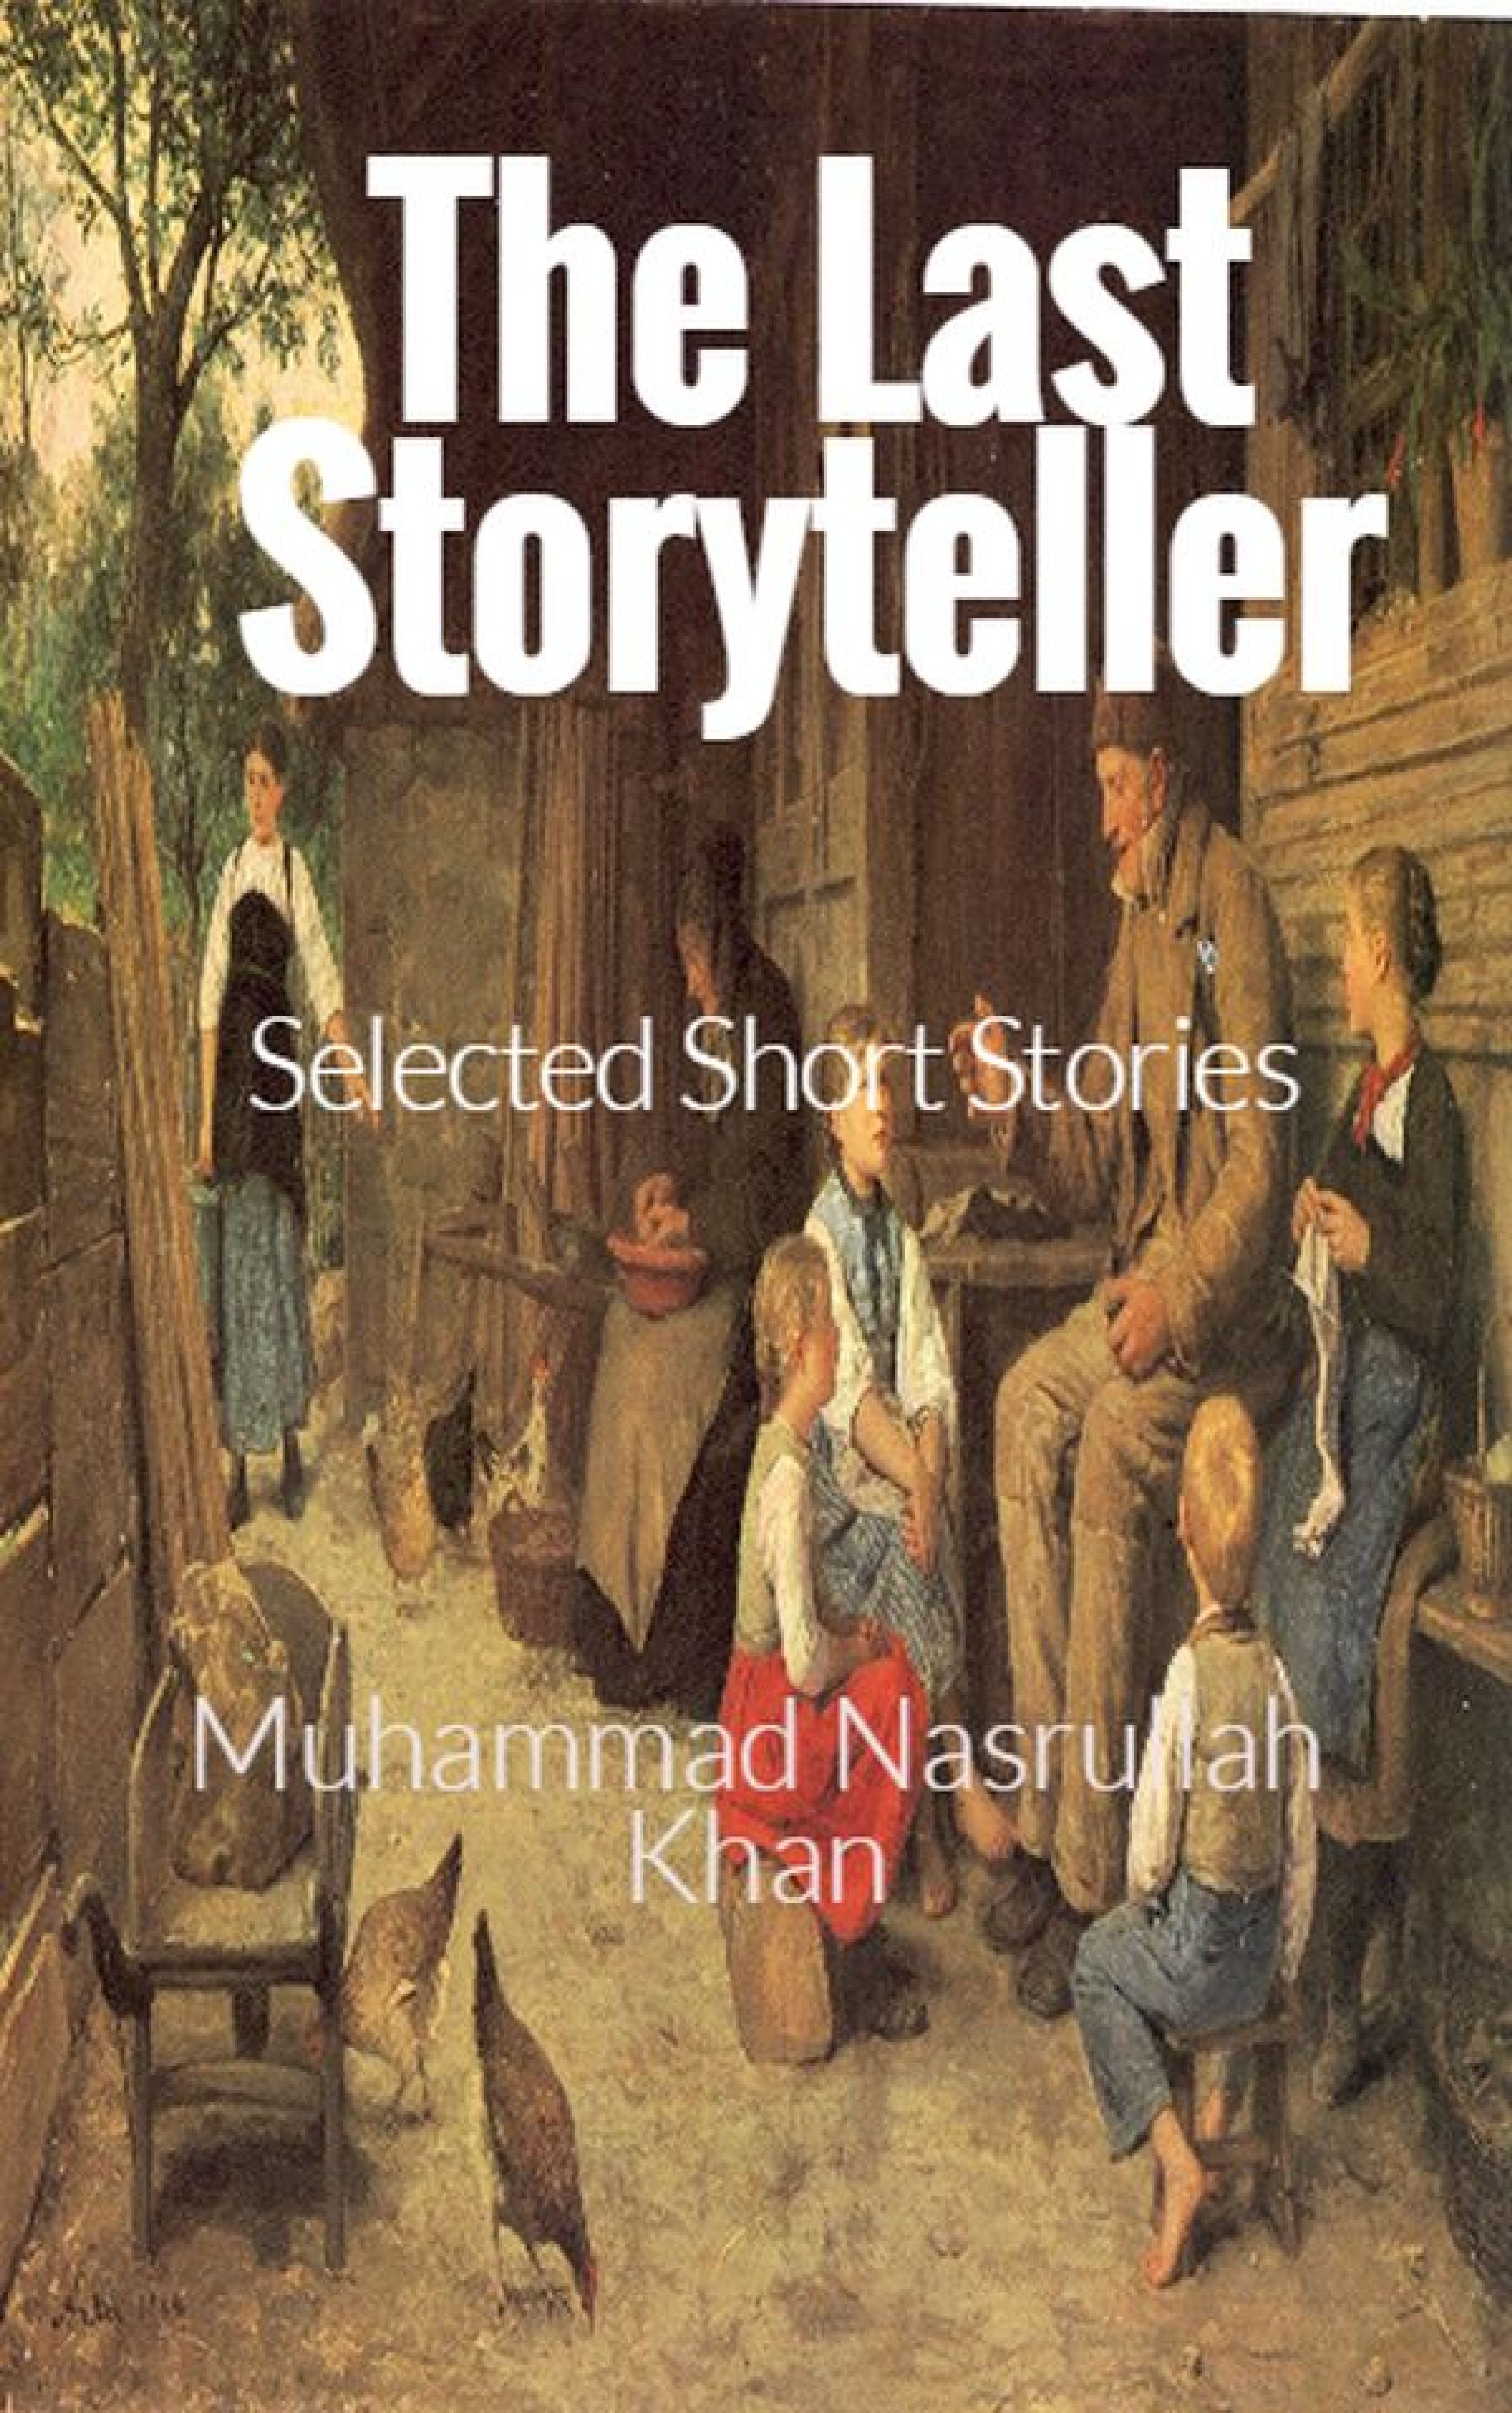 FREE: The Last Storyteller by Muhammad Nasrullah Khan